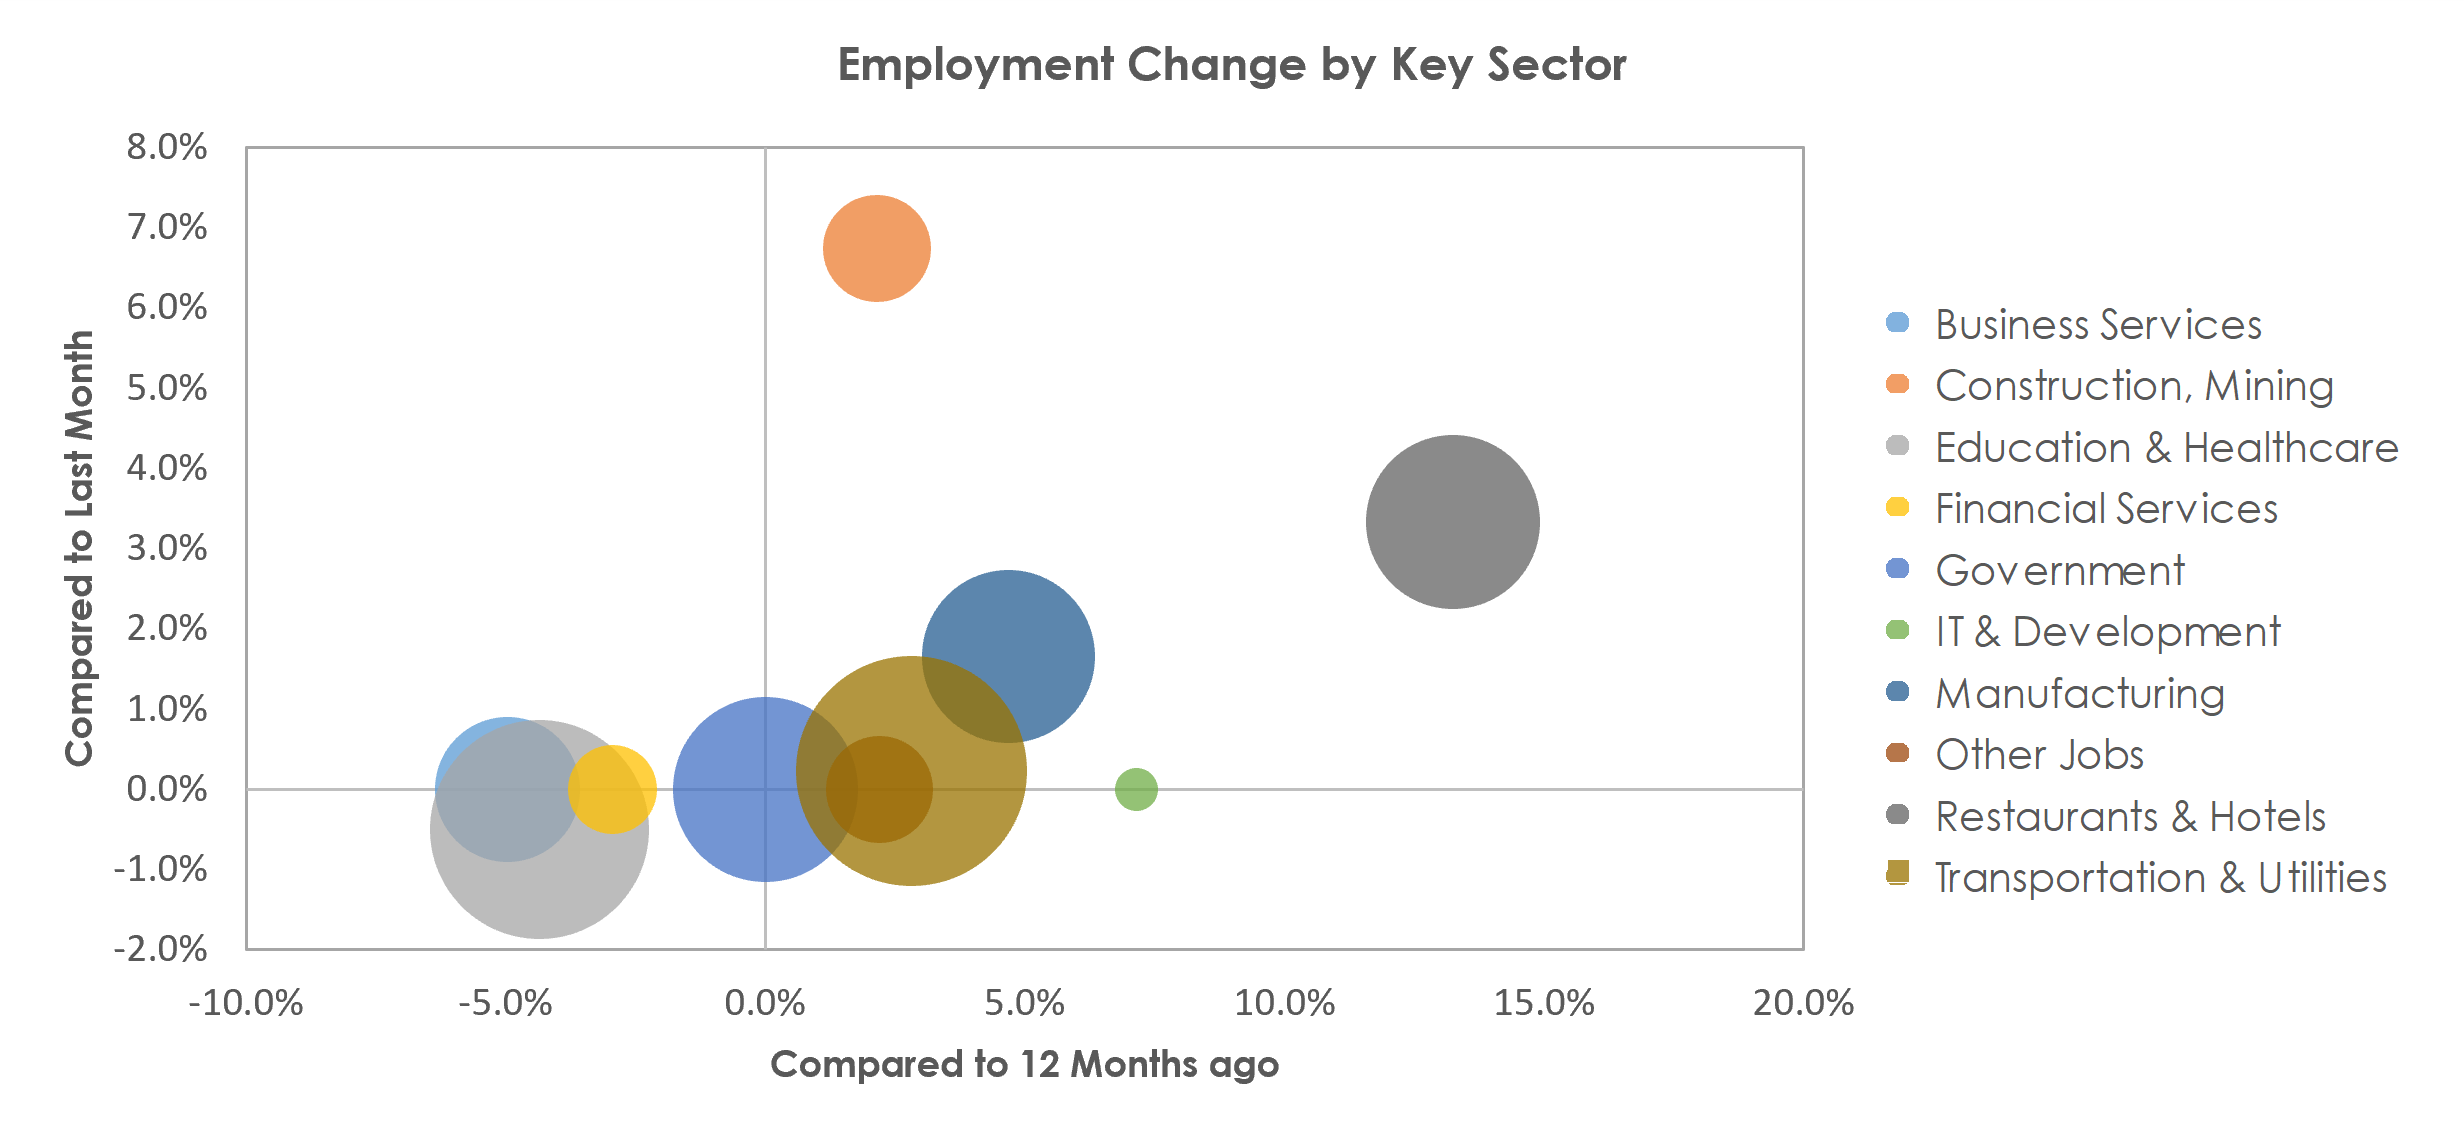 Youngstown-Warren-Boardman, OH-PA Unemployment by Industry April 2022